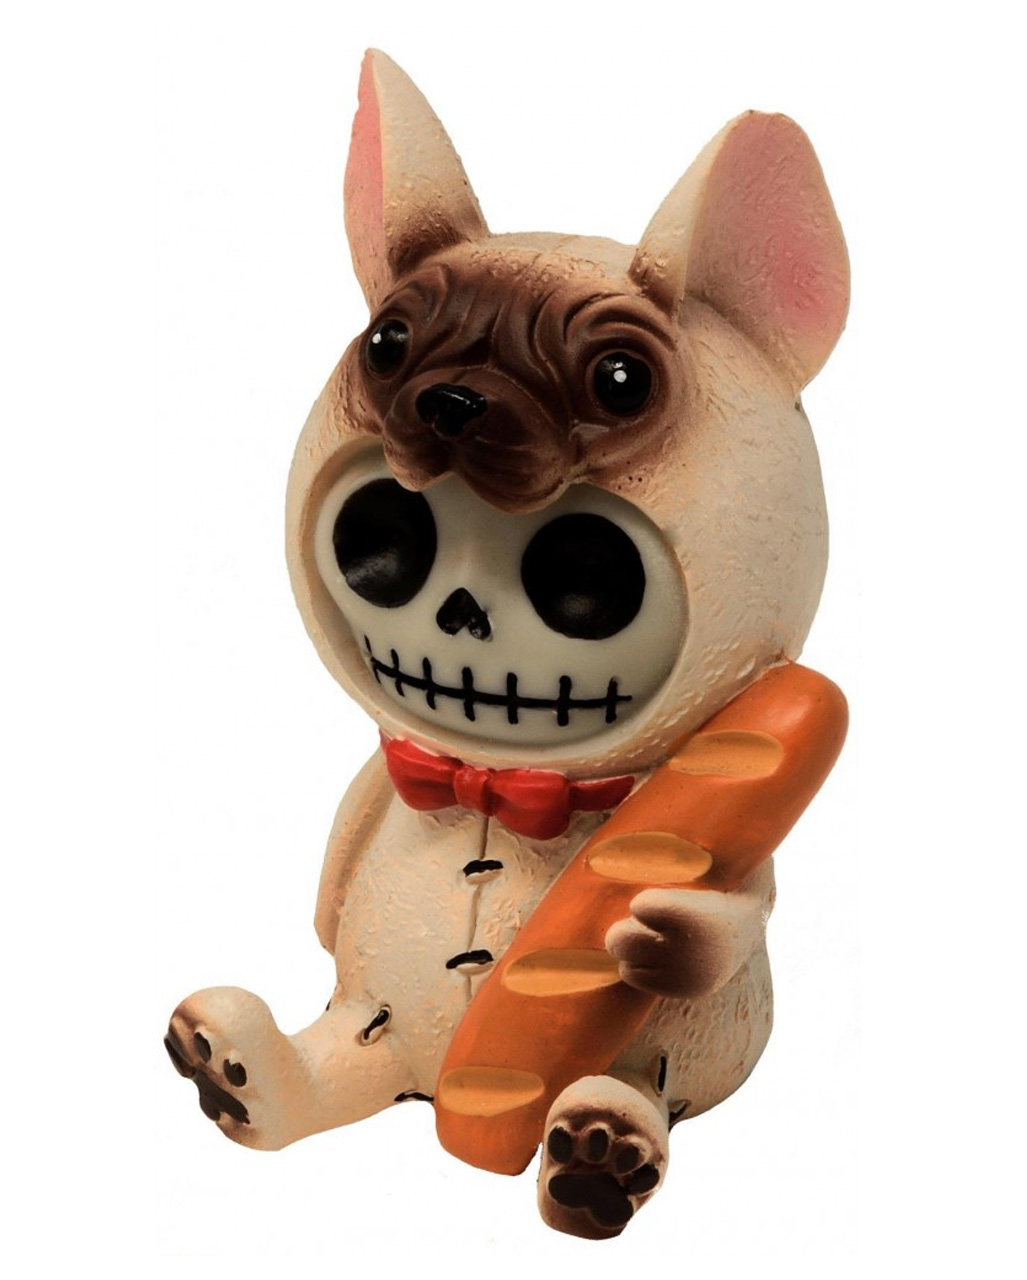 Furrybones French Bulldog the Dog Figurine Skull in Costume New Free Shipping 